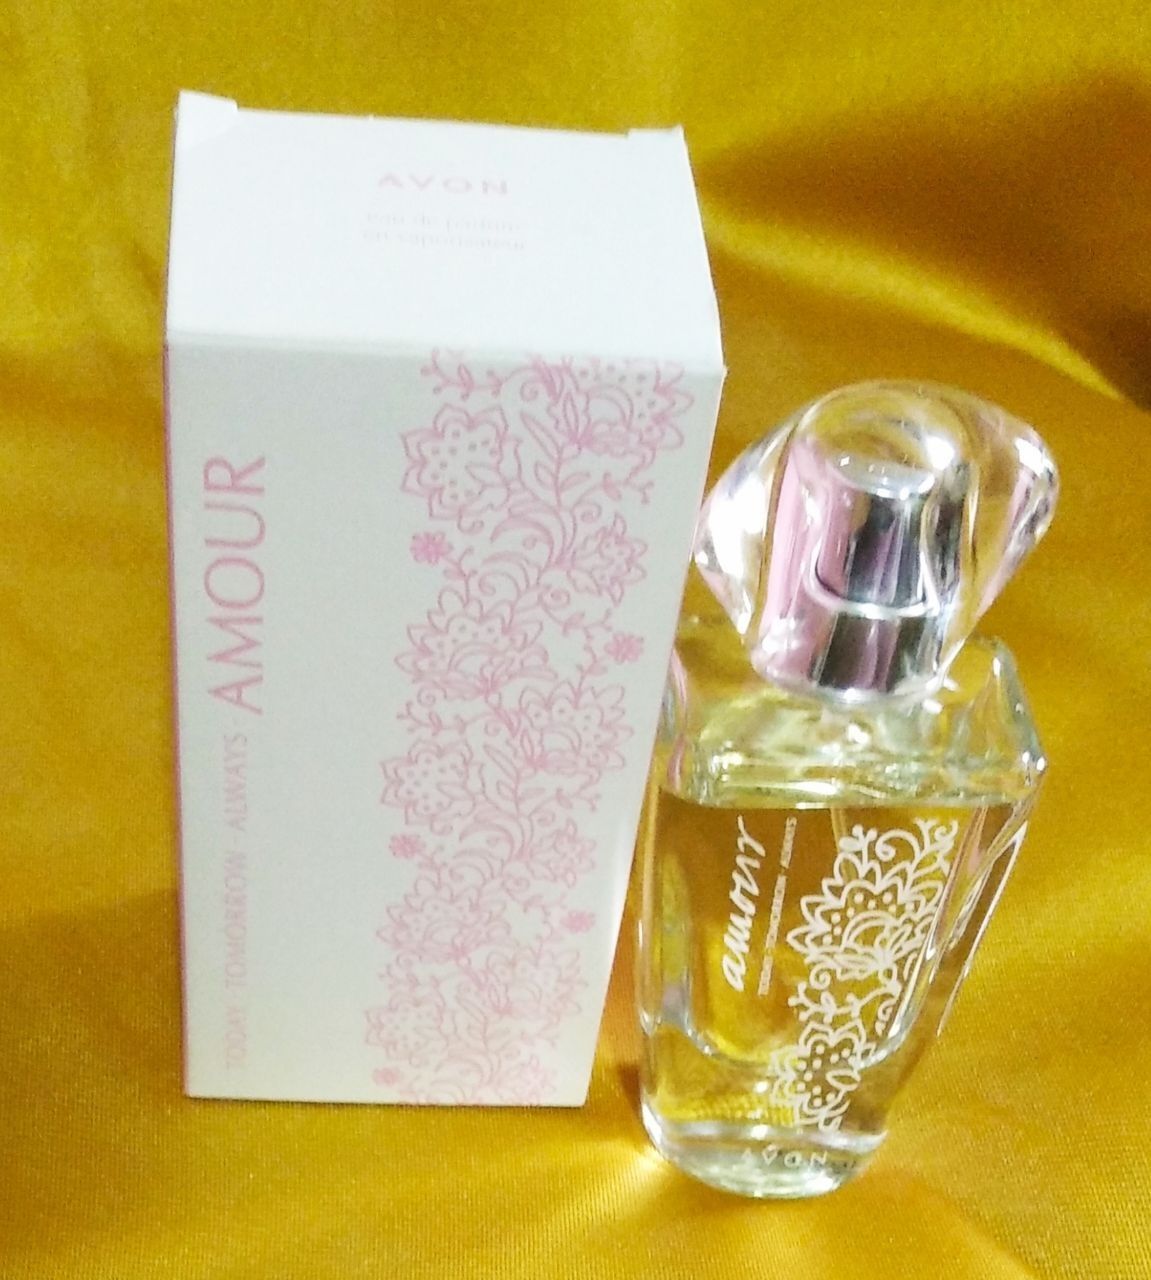 Шикарный женский парфюм от Avon